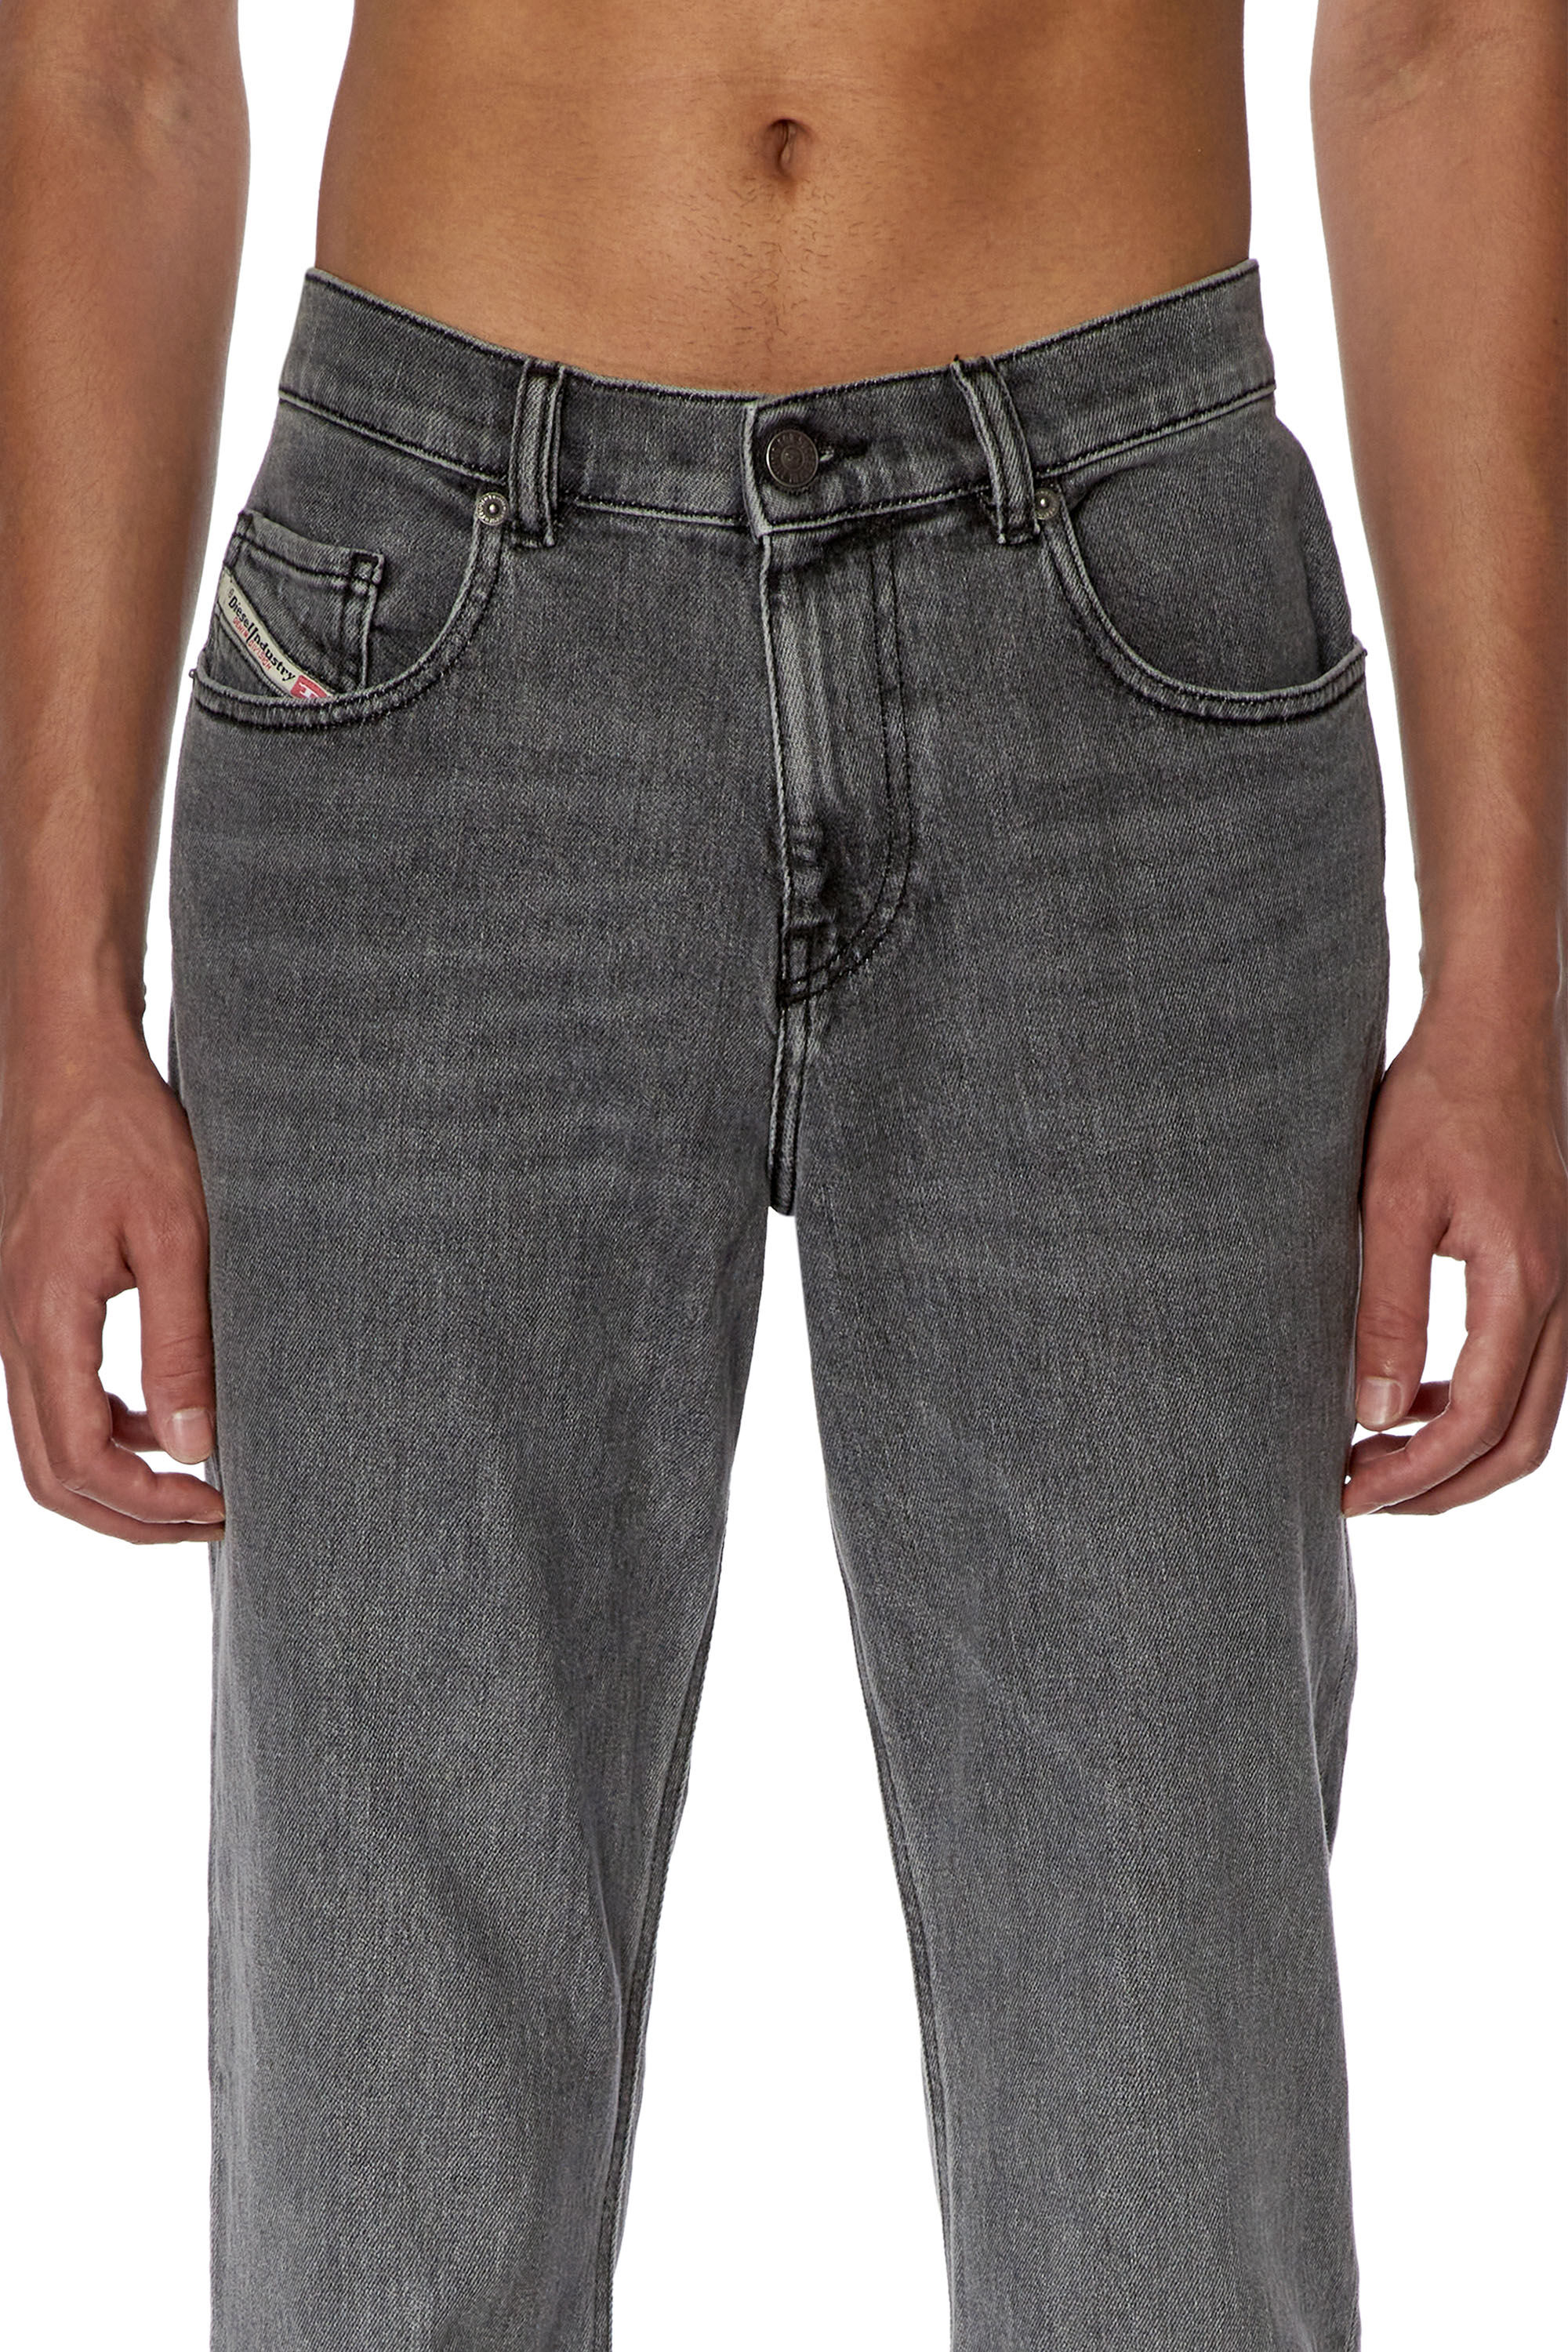 Men's Bootcut Jeans, Black/Dark grey